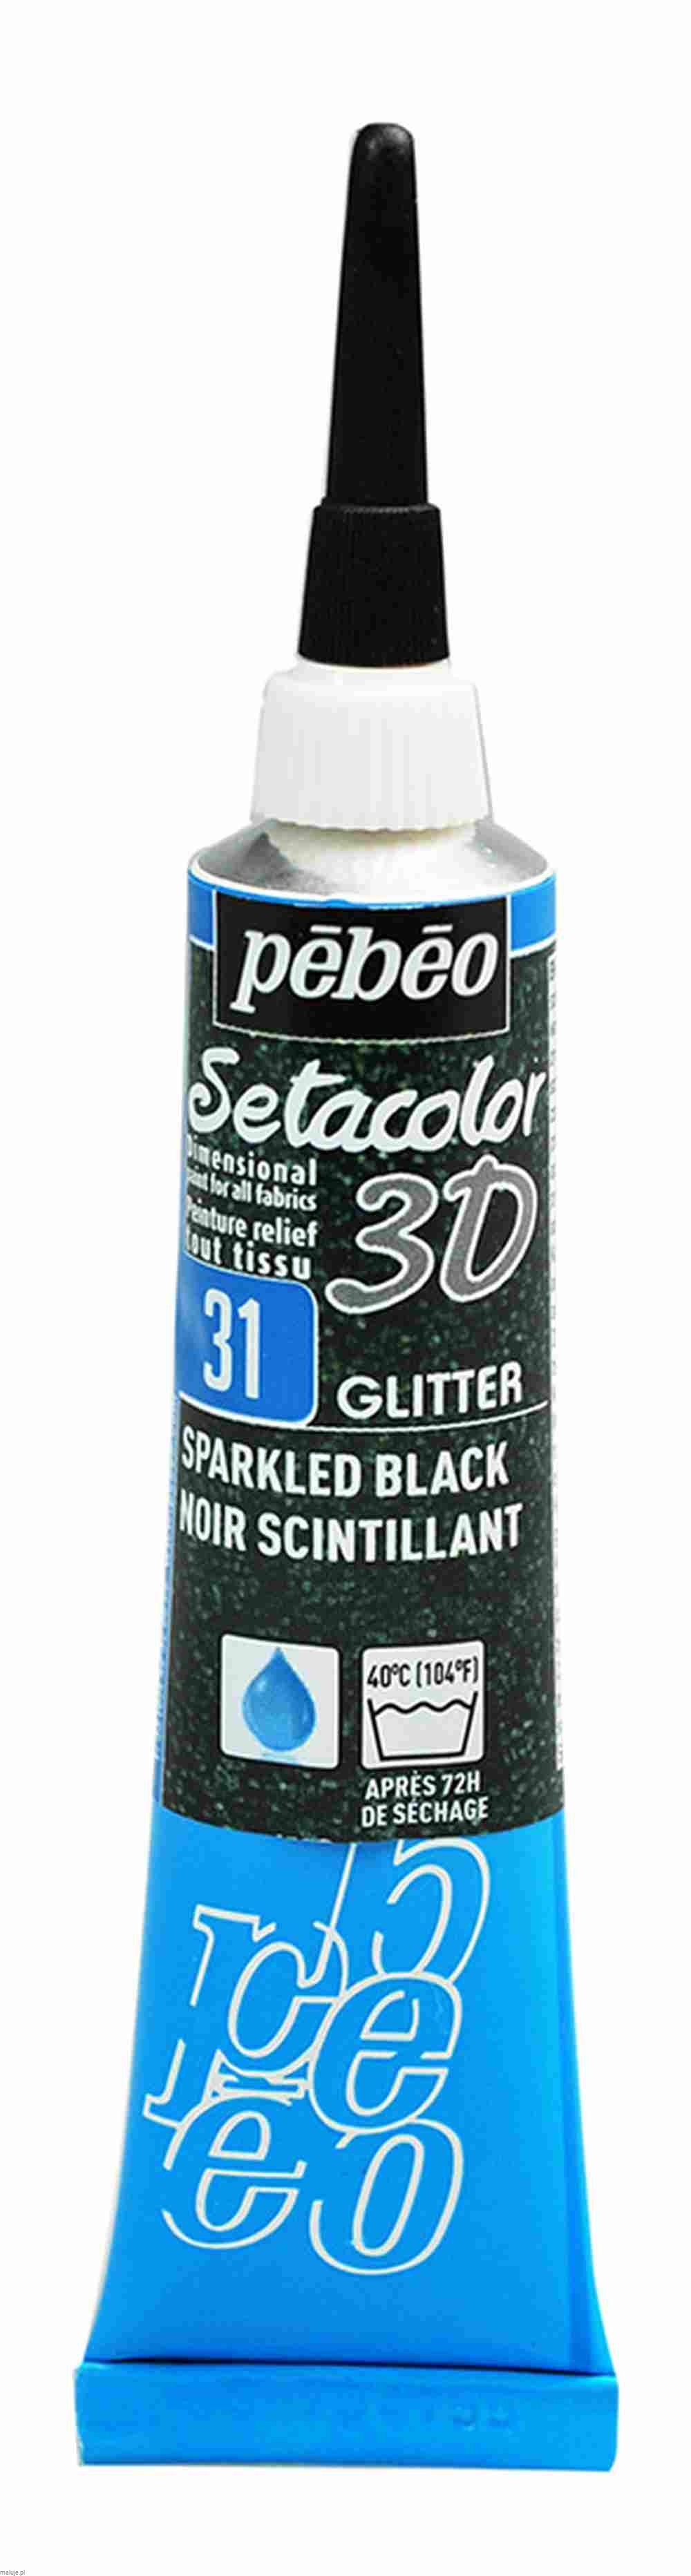 Pebeo Setacolor 3D GLITTER SPARKLING BLACK 20ml - konturówka do tkanin